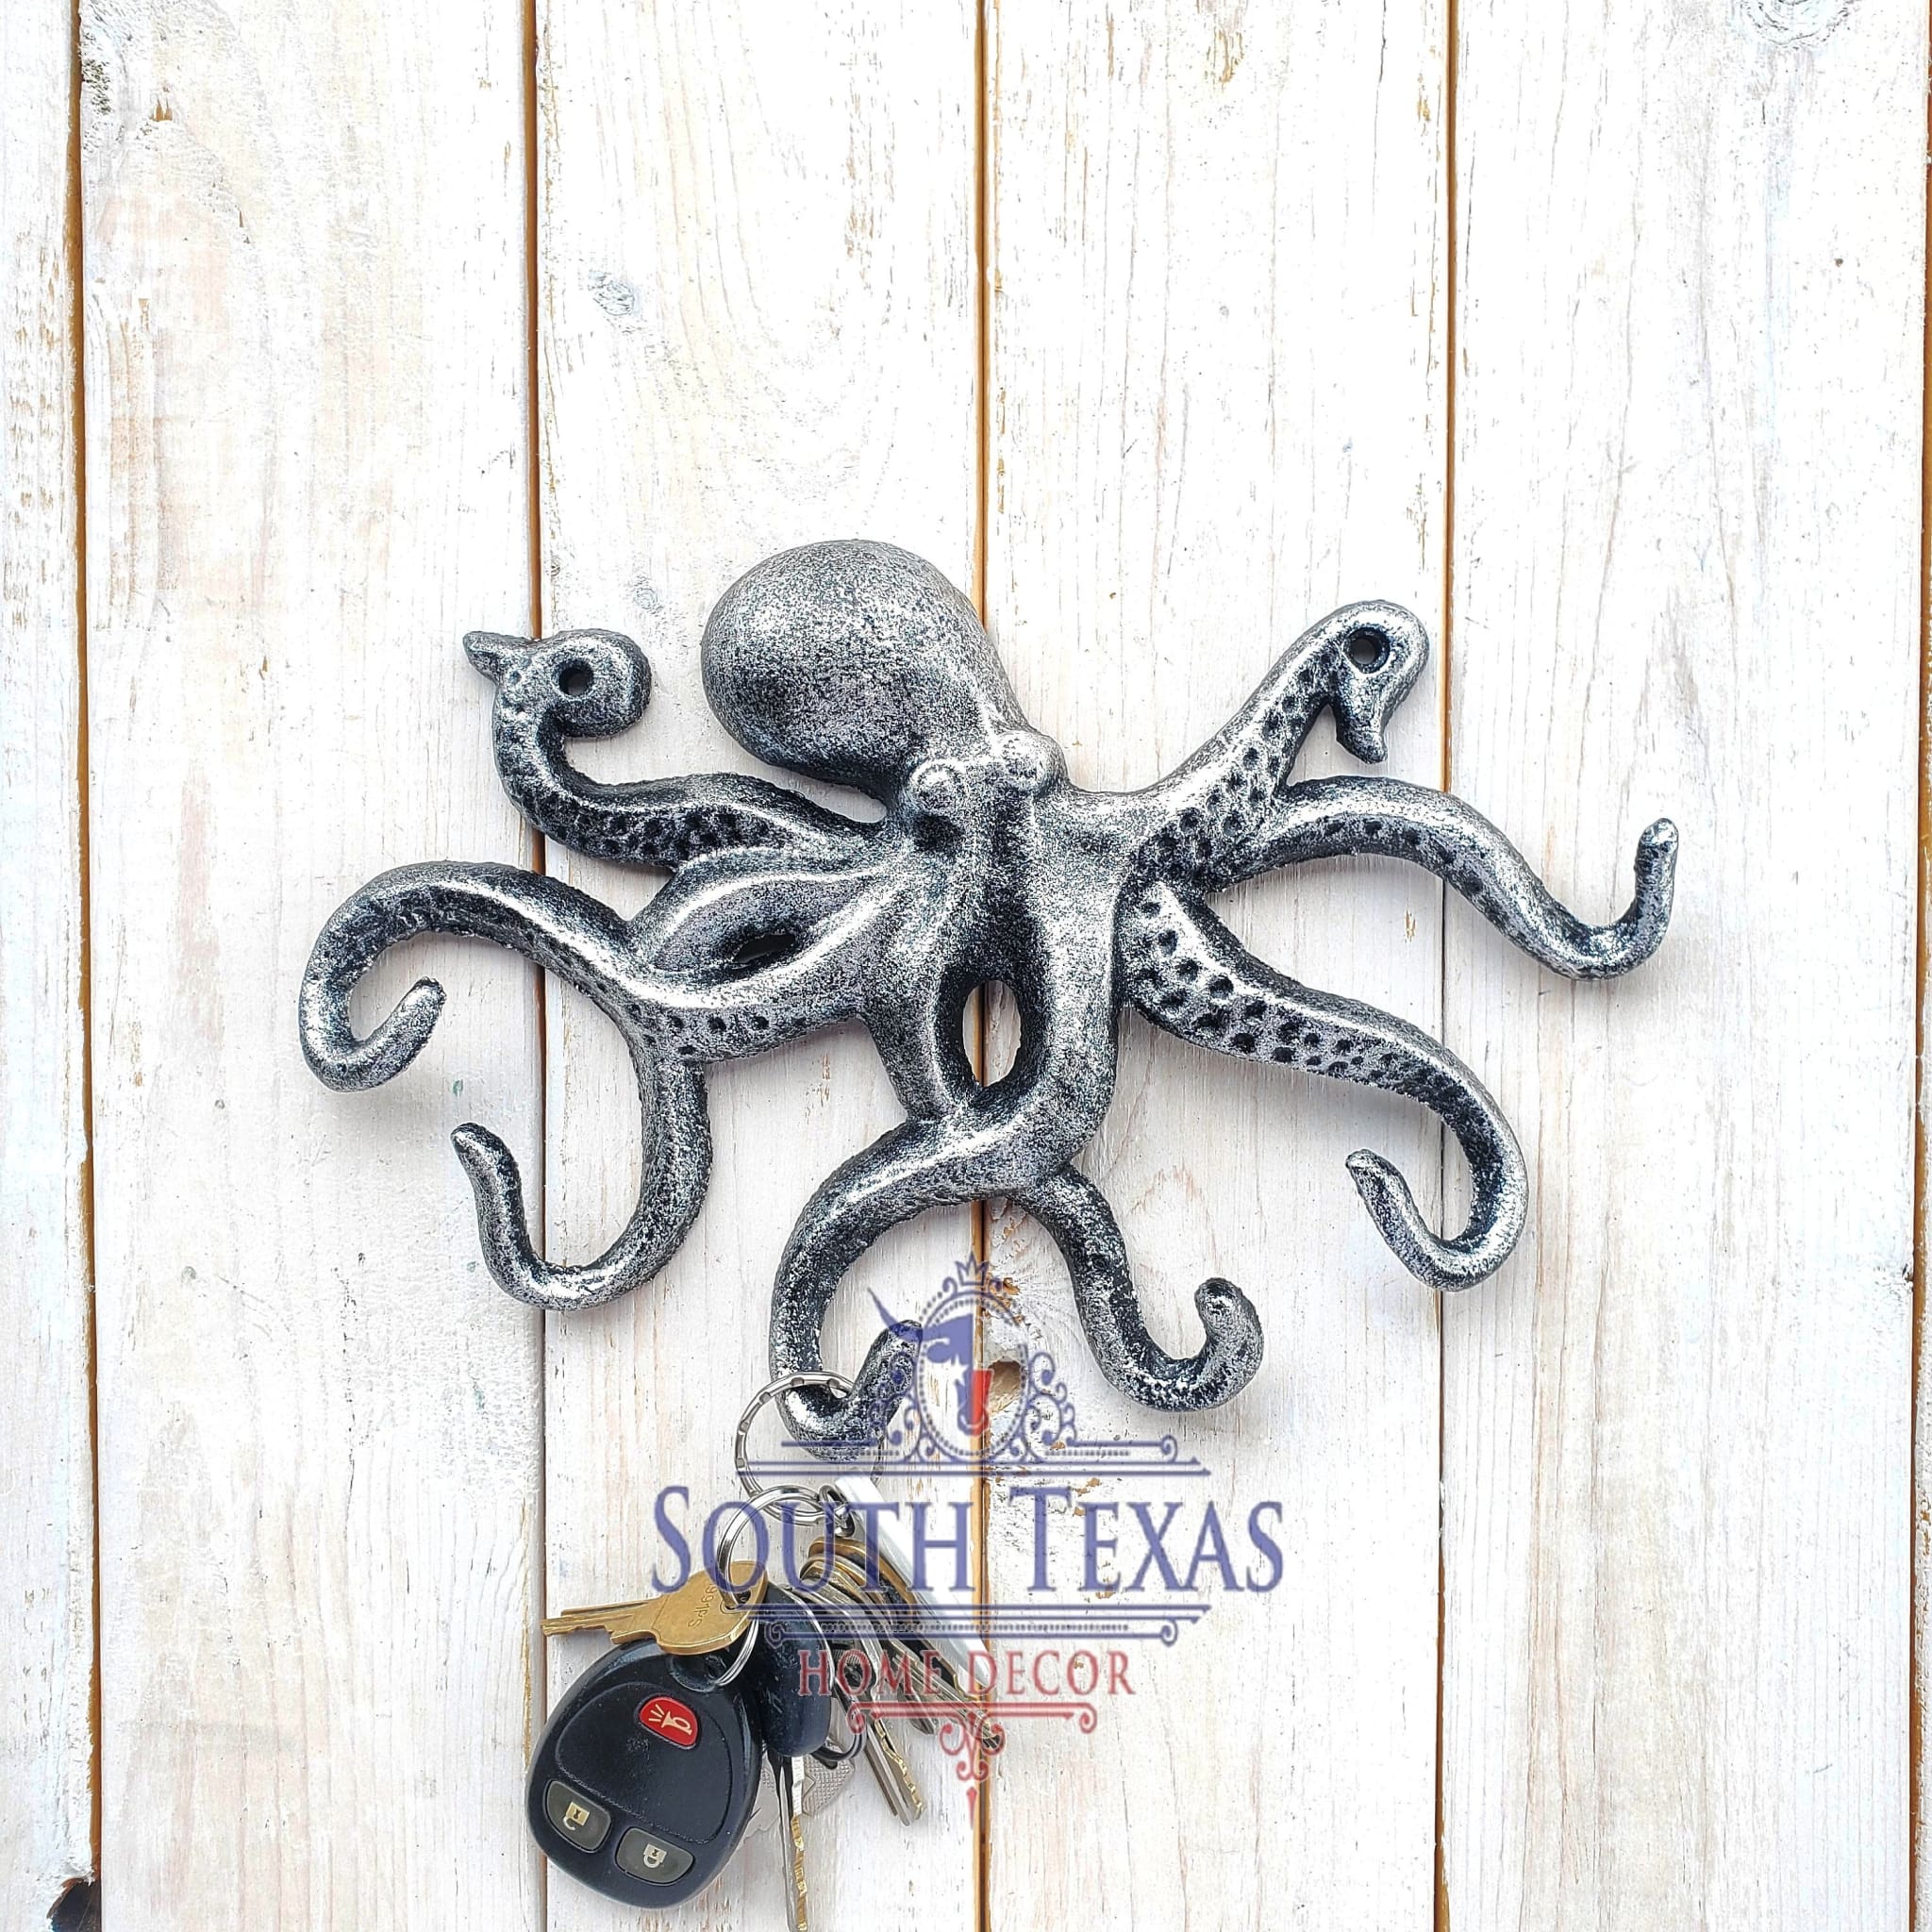 South Texas Home Decor - Octopus Key Holder Towel Holder Towel